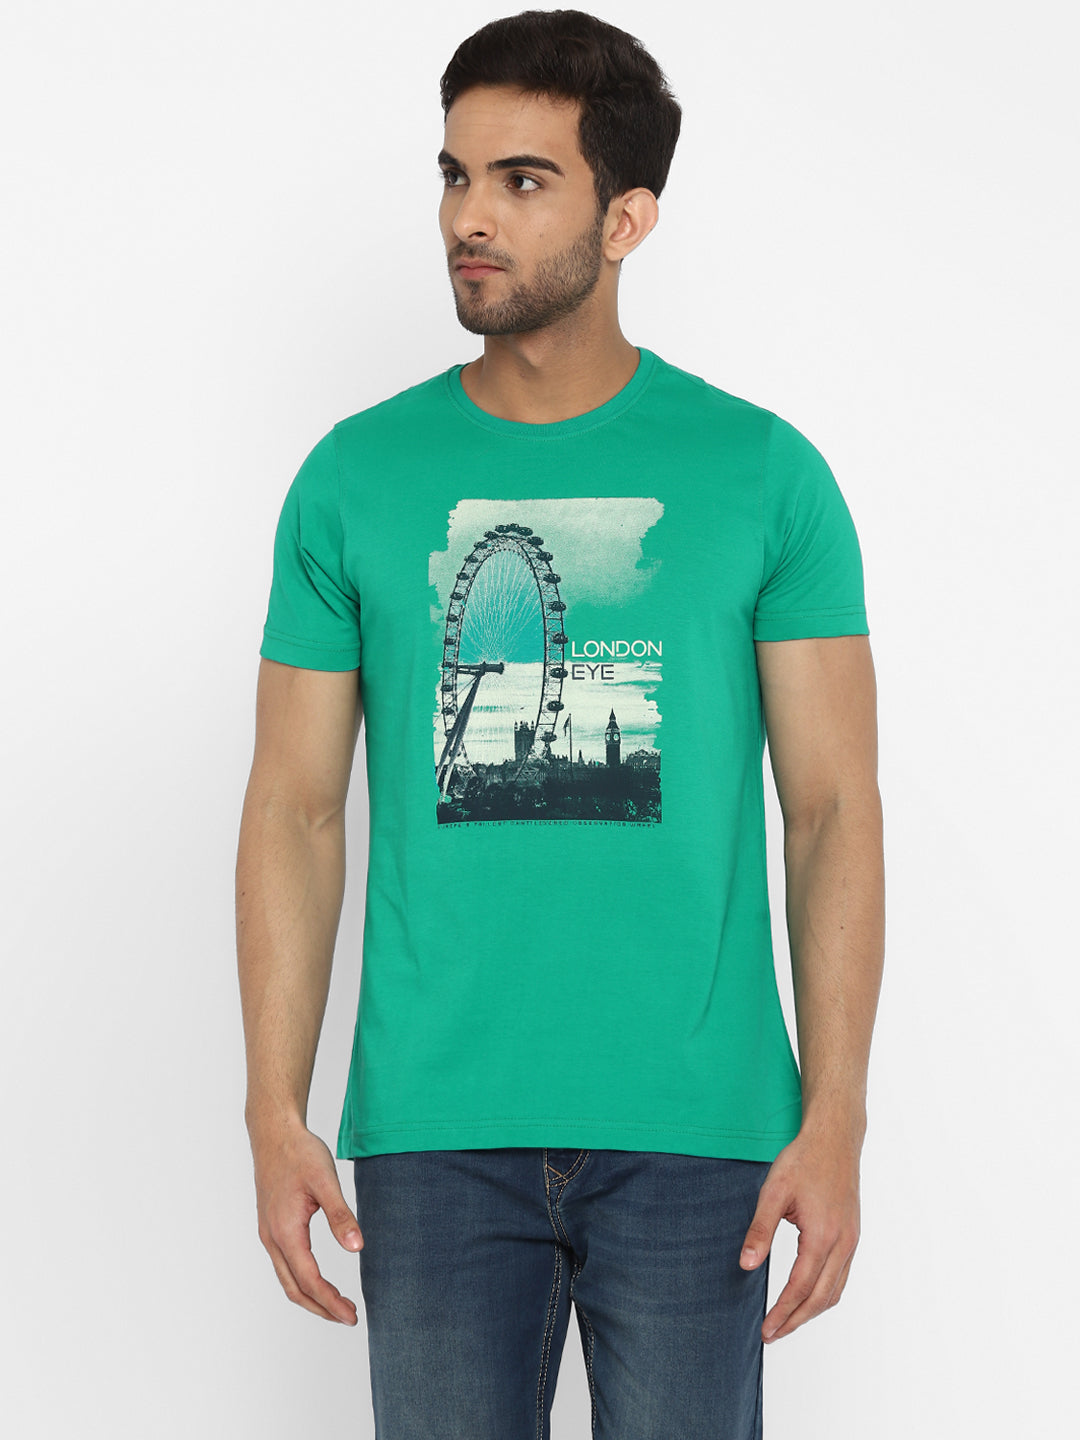 Green Printed Polo Neck T-Shirt